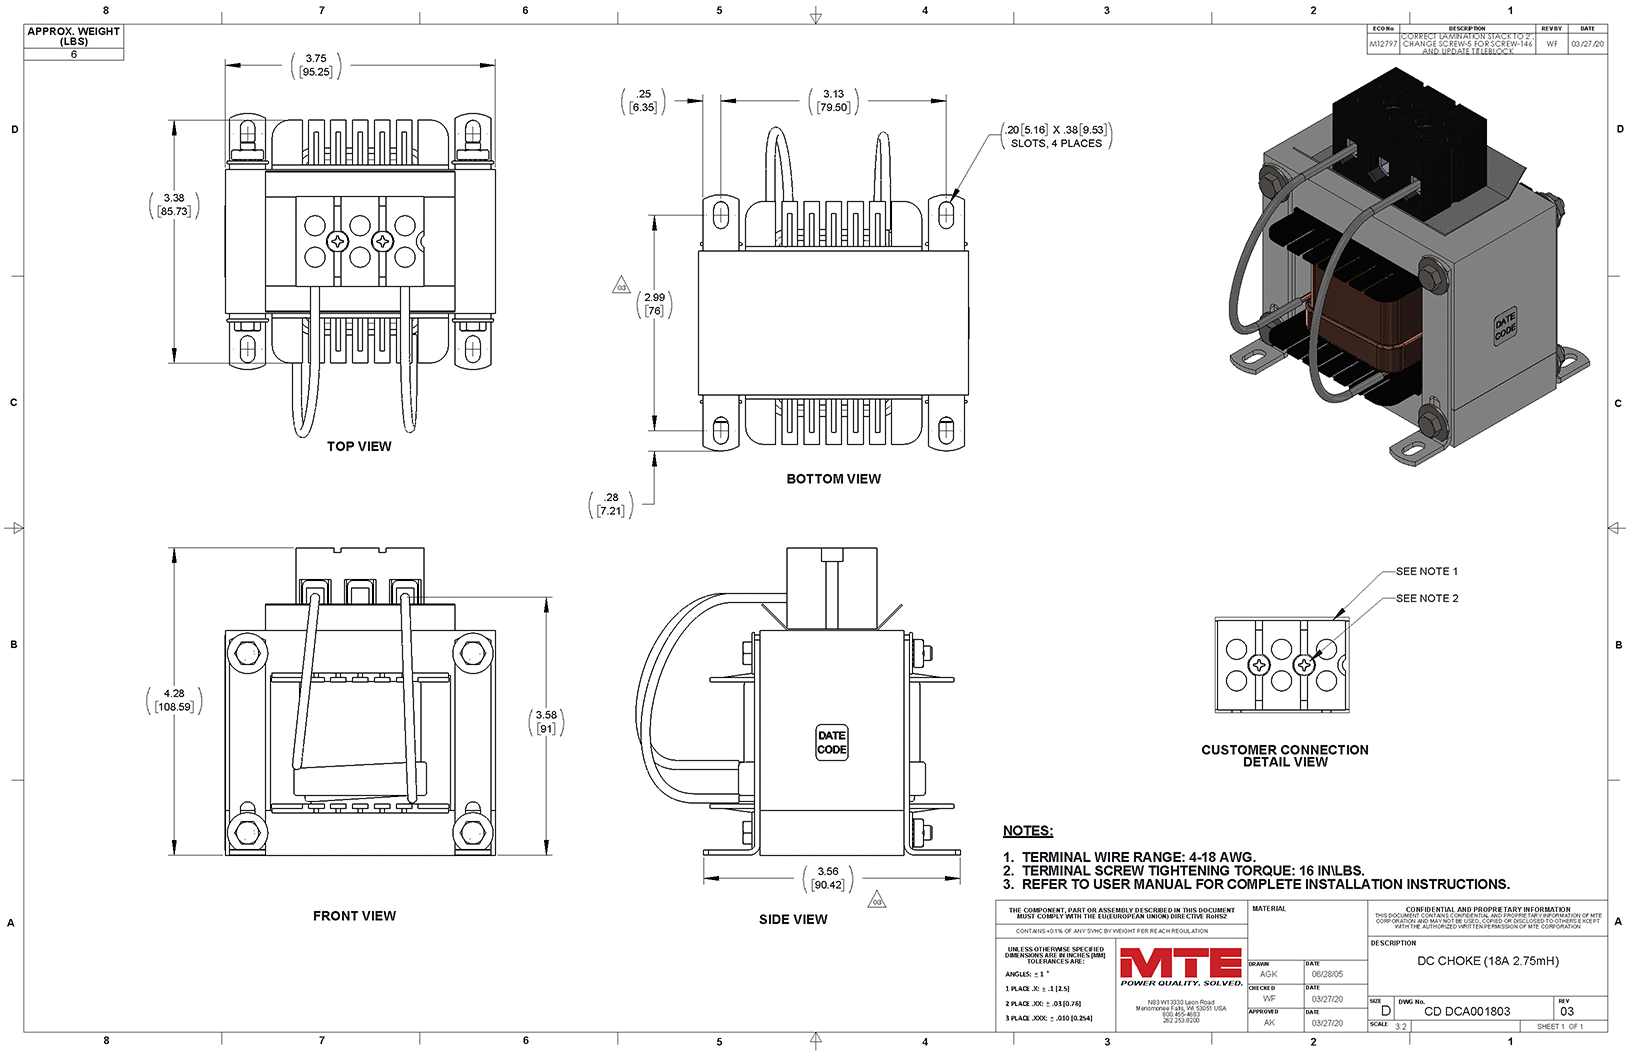 Drawings of MTE DC Link Choke DCA001803